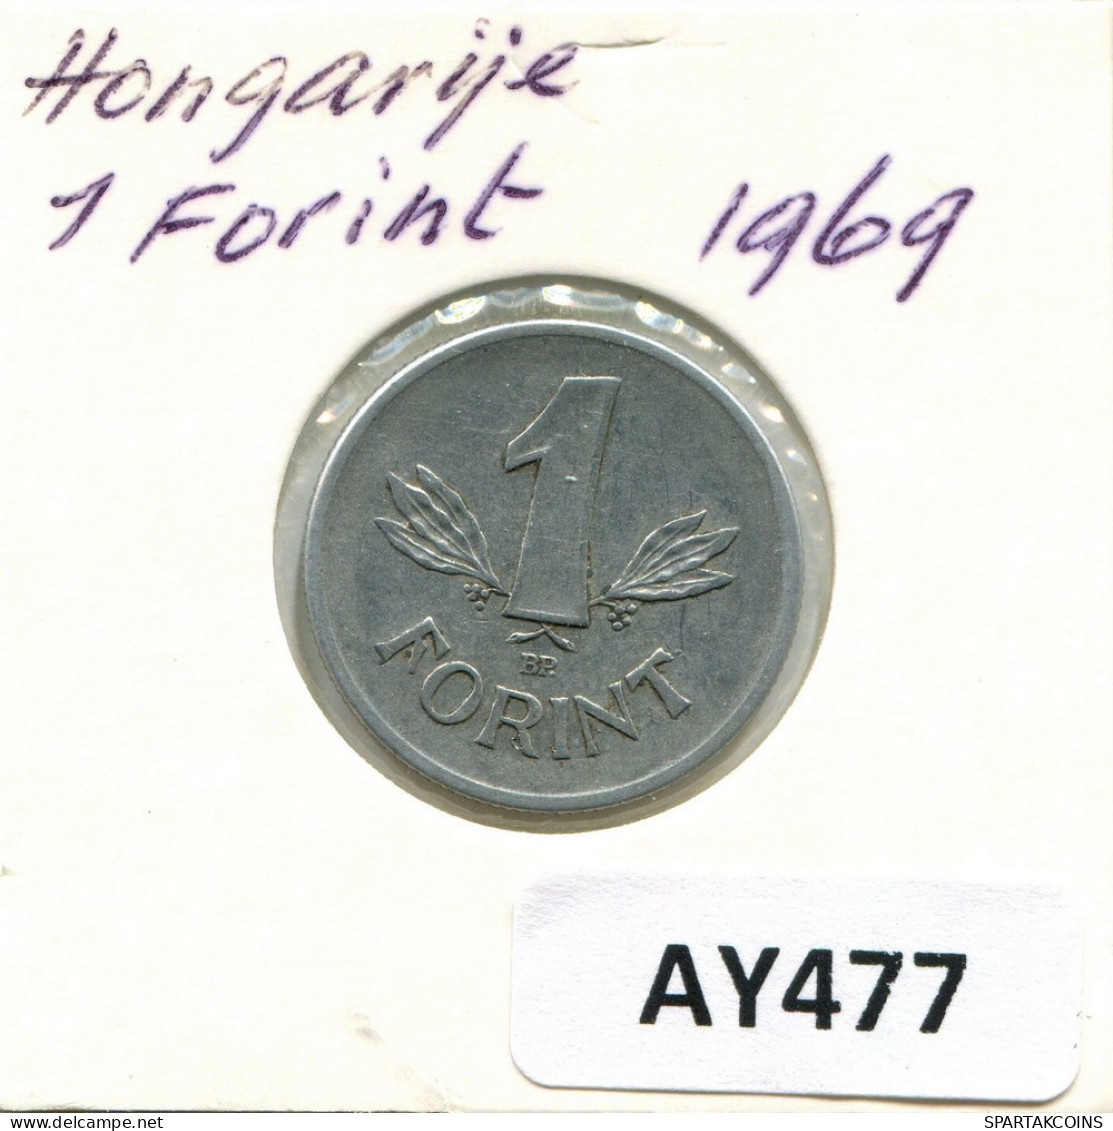 1 FORINT 1969 SIEBENBÜRGEN HUNGARY Münze #AY477.D.A - Hungary